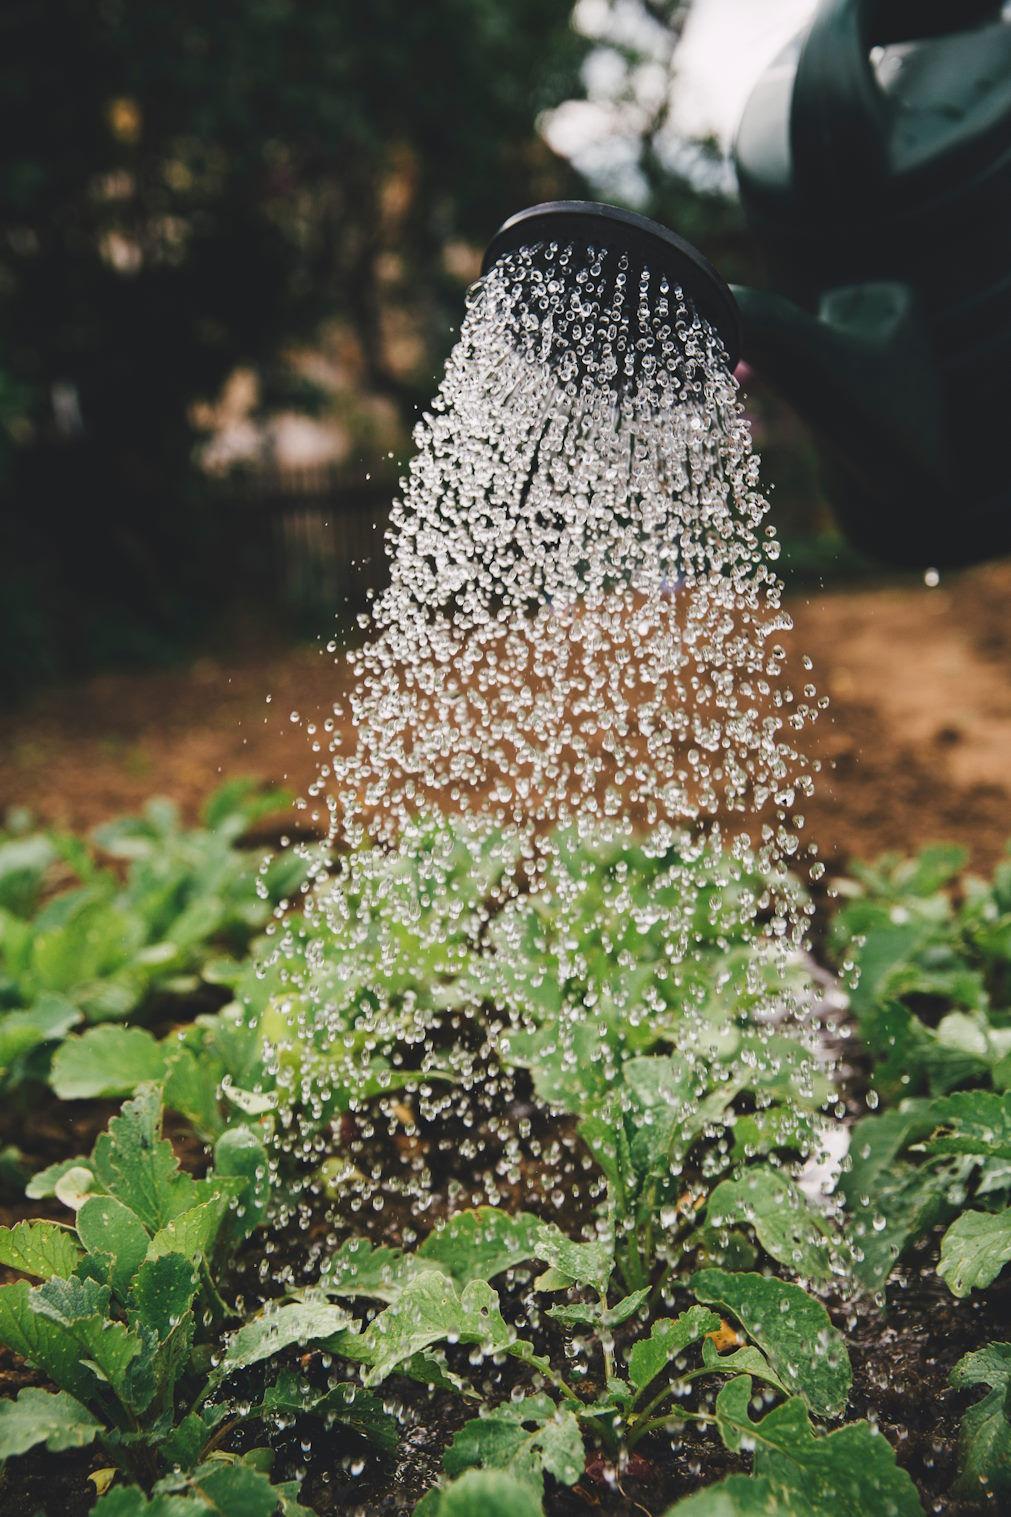 "A água azul pode ser usada para irrigar plantas, erva ou outras culturas alimentares